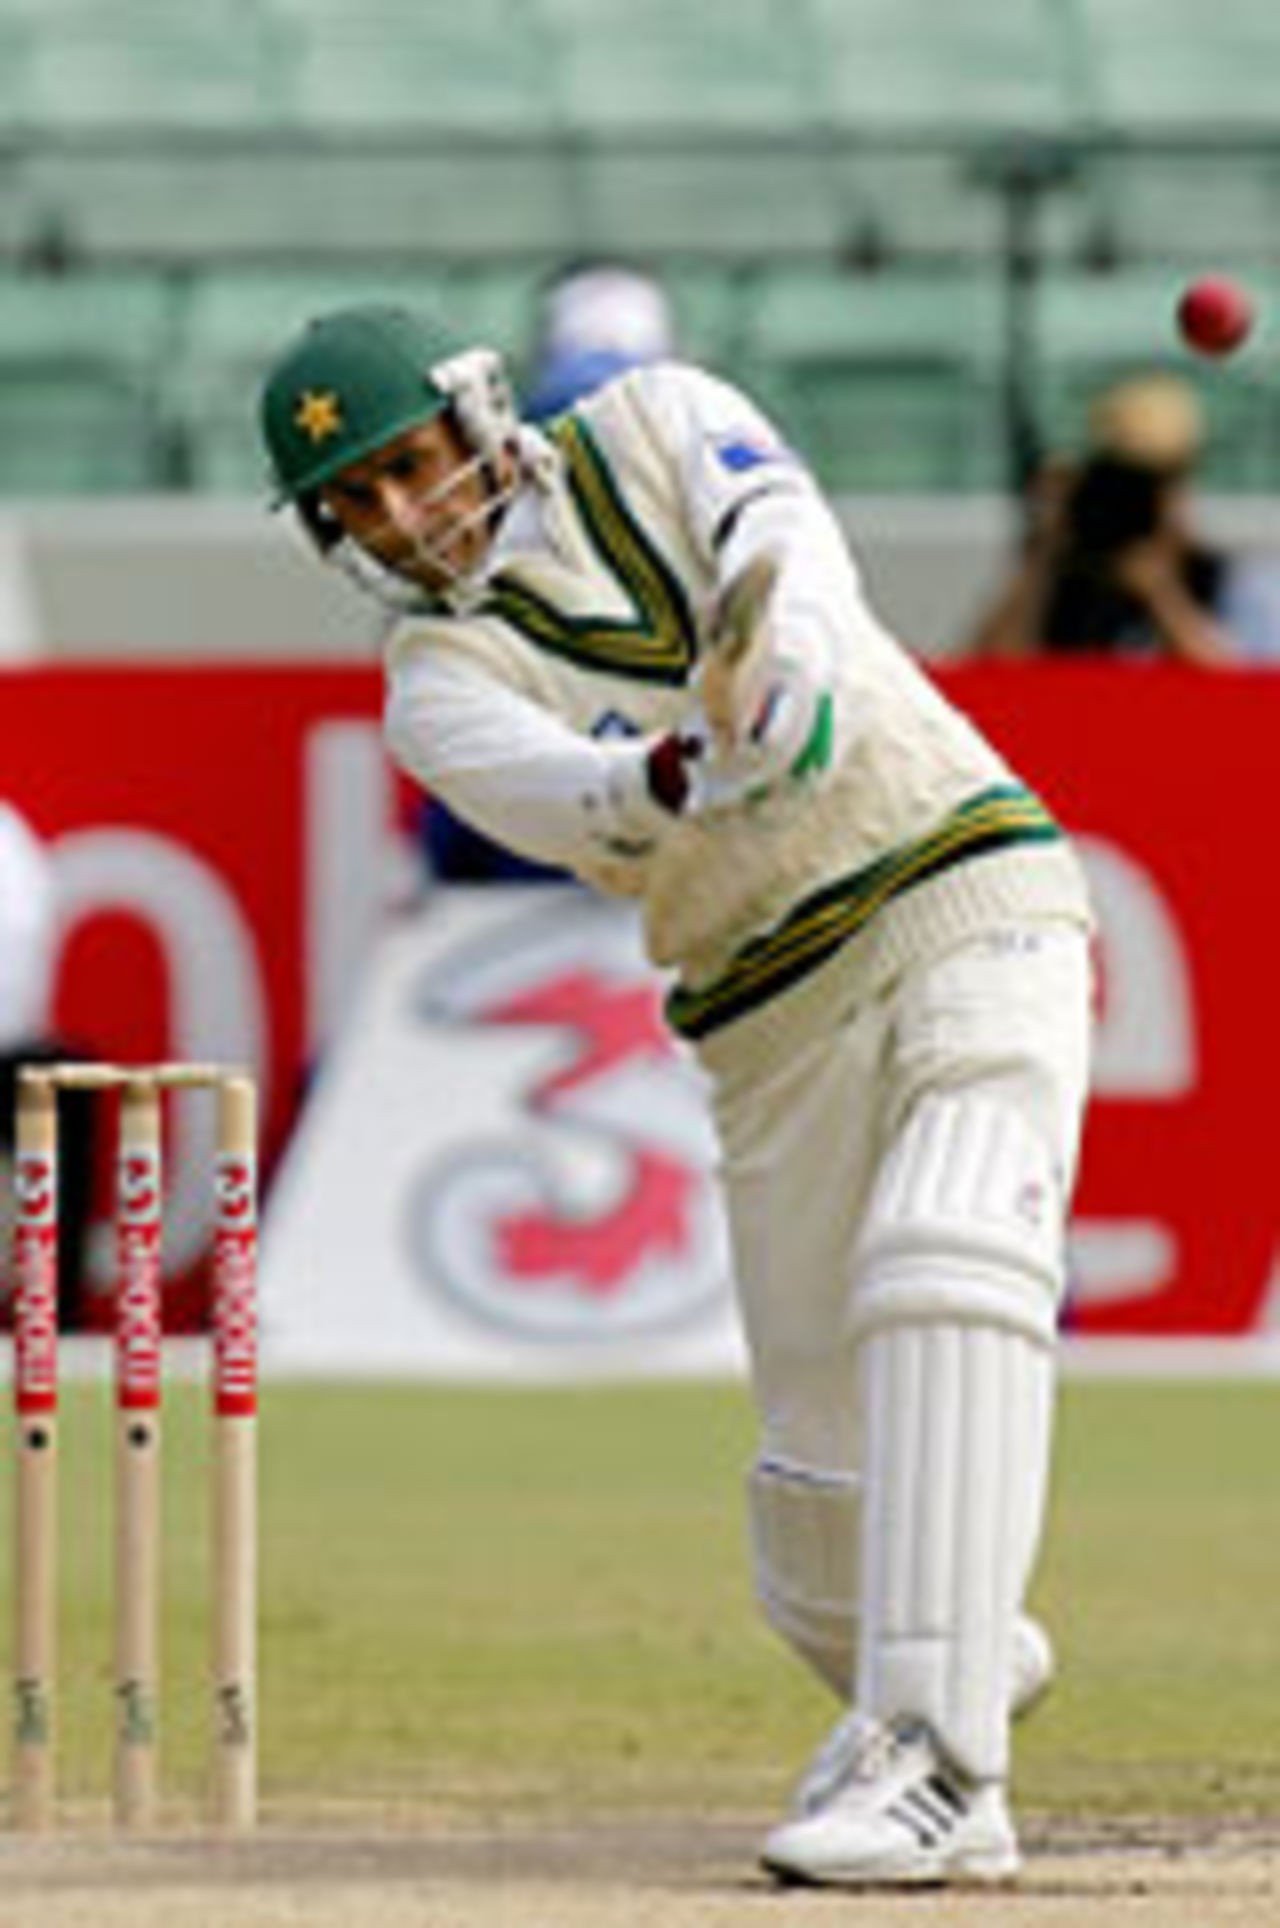 Abdul Razzaq batting a sweater, Australia v Pakistan, 2nd Test, Melbourne, 4th day, December 29 2004